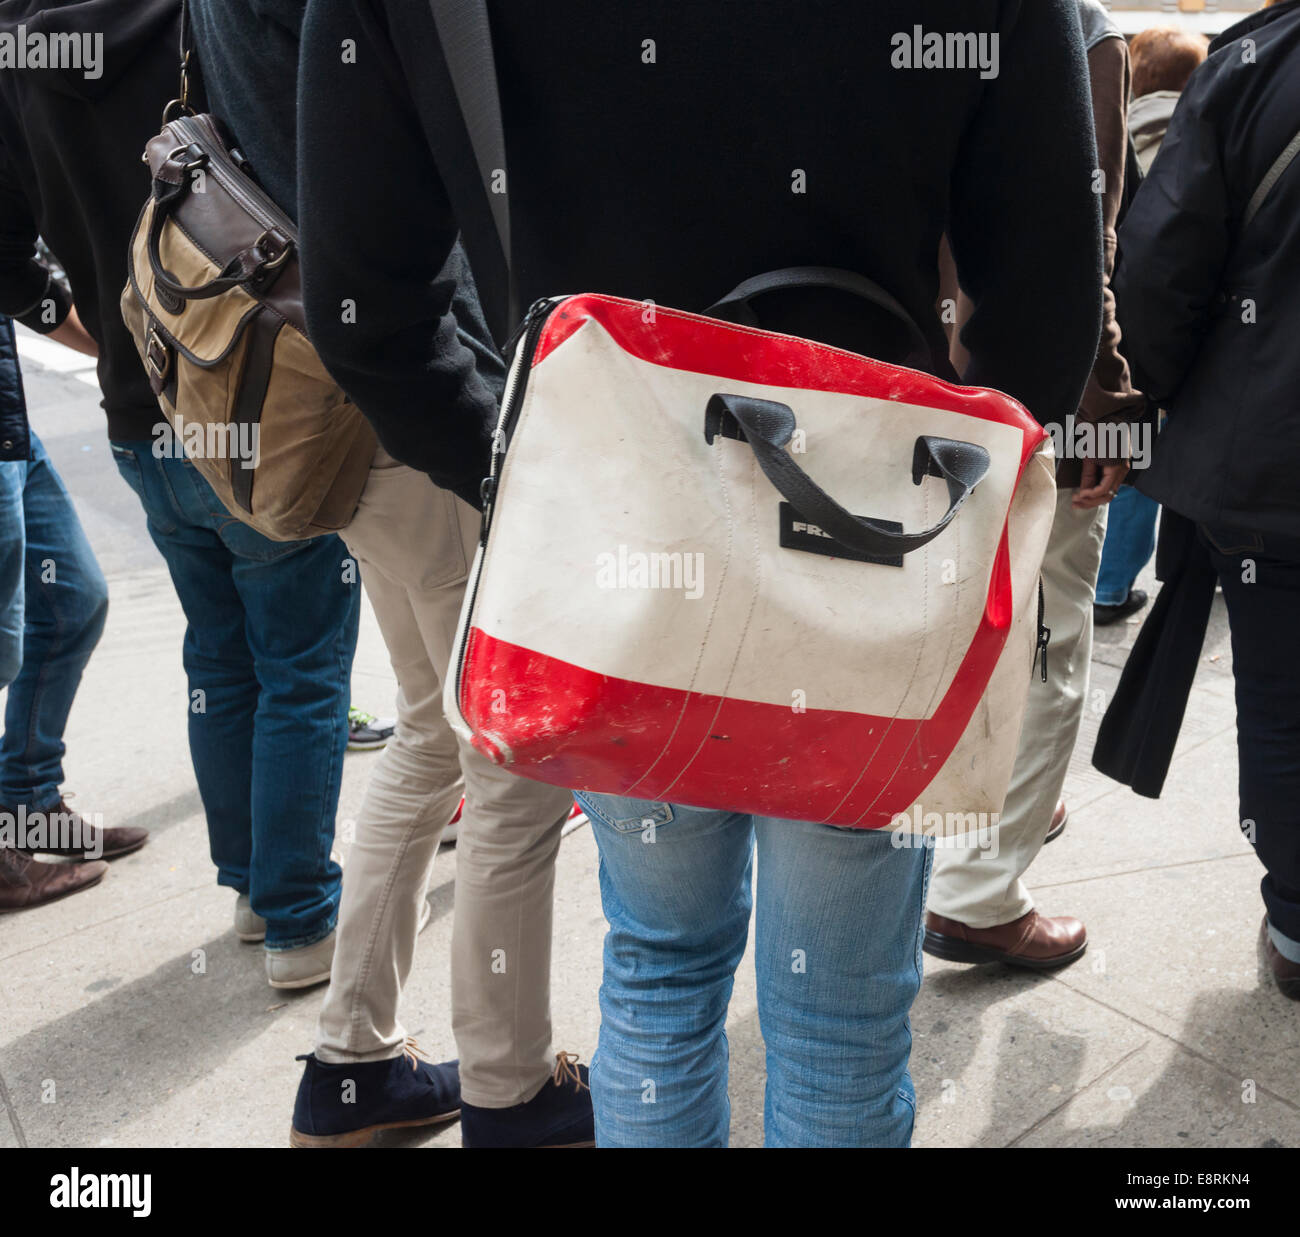 A Freitag messenger bag in New York Stock Photo